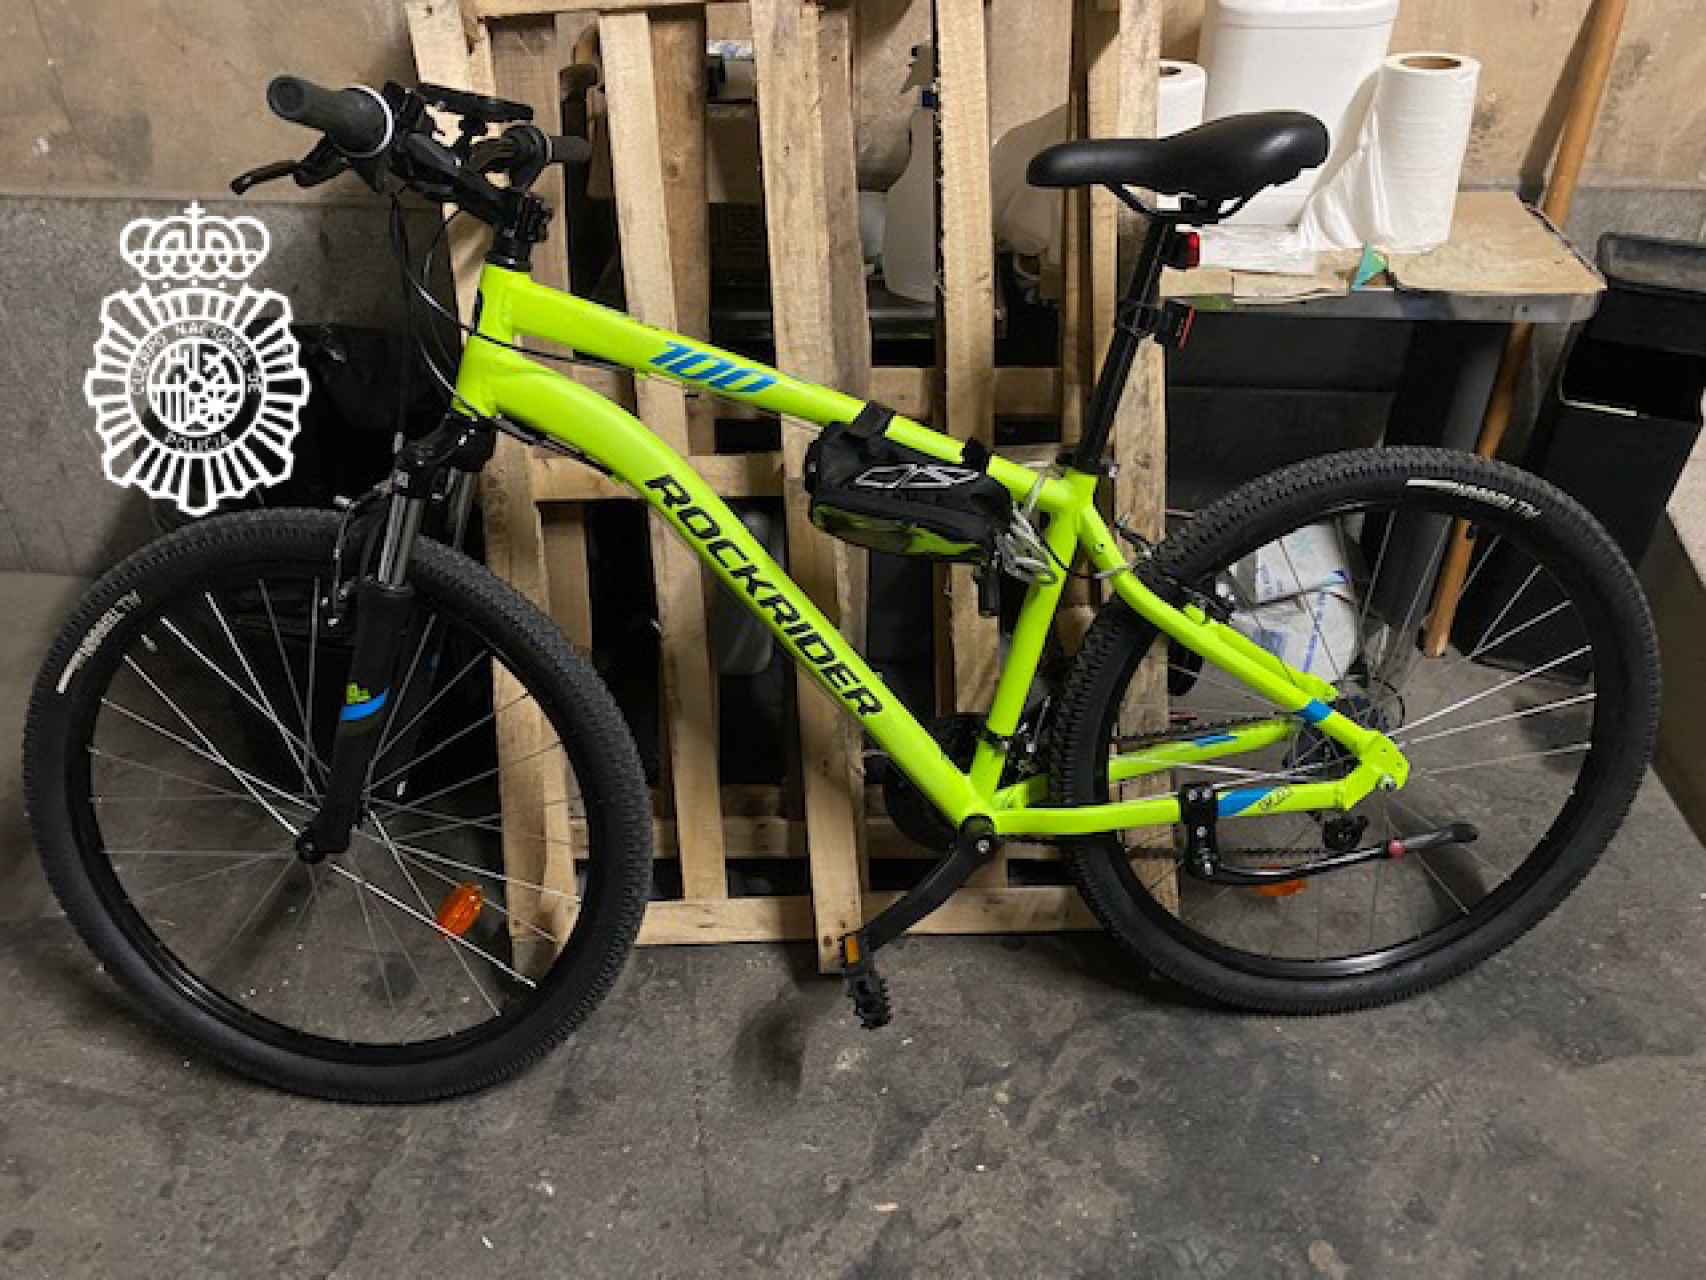 Bicicleta robada en Salamanca